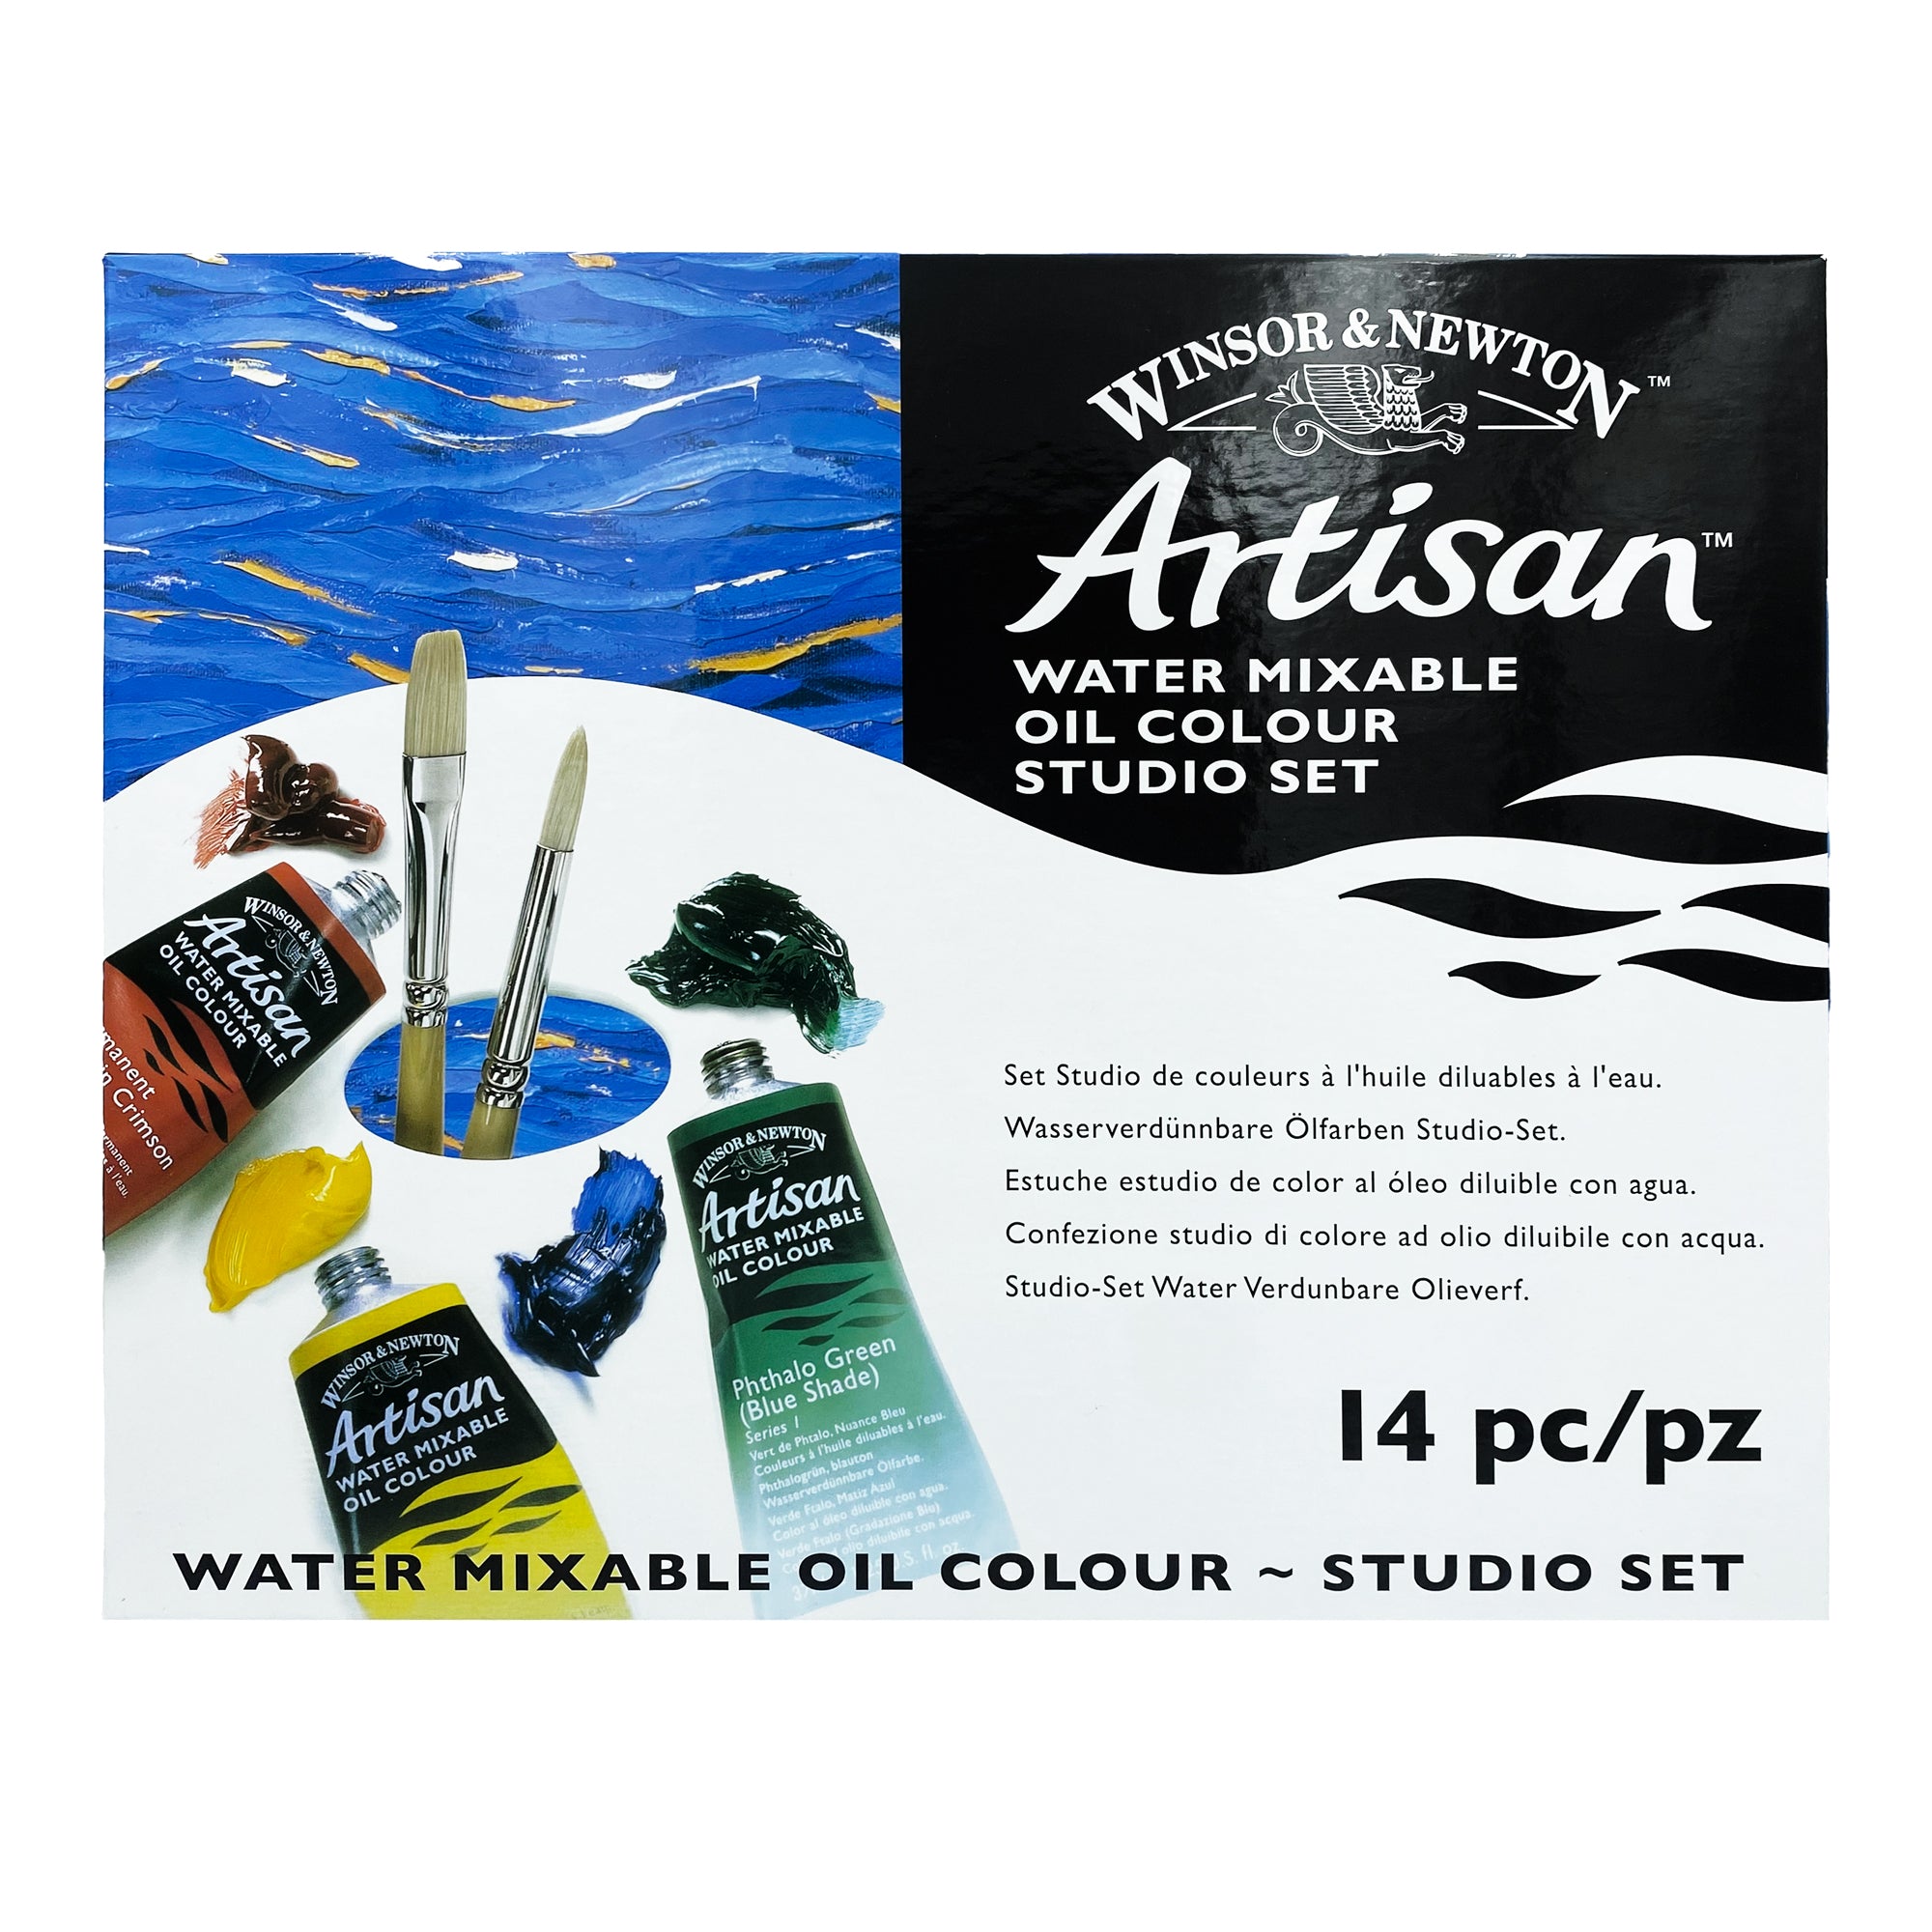 Winsor & Newton Artisan Water Mixable Oil Studio Set